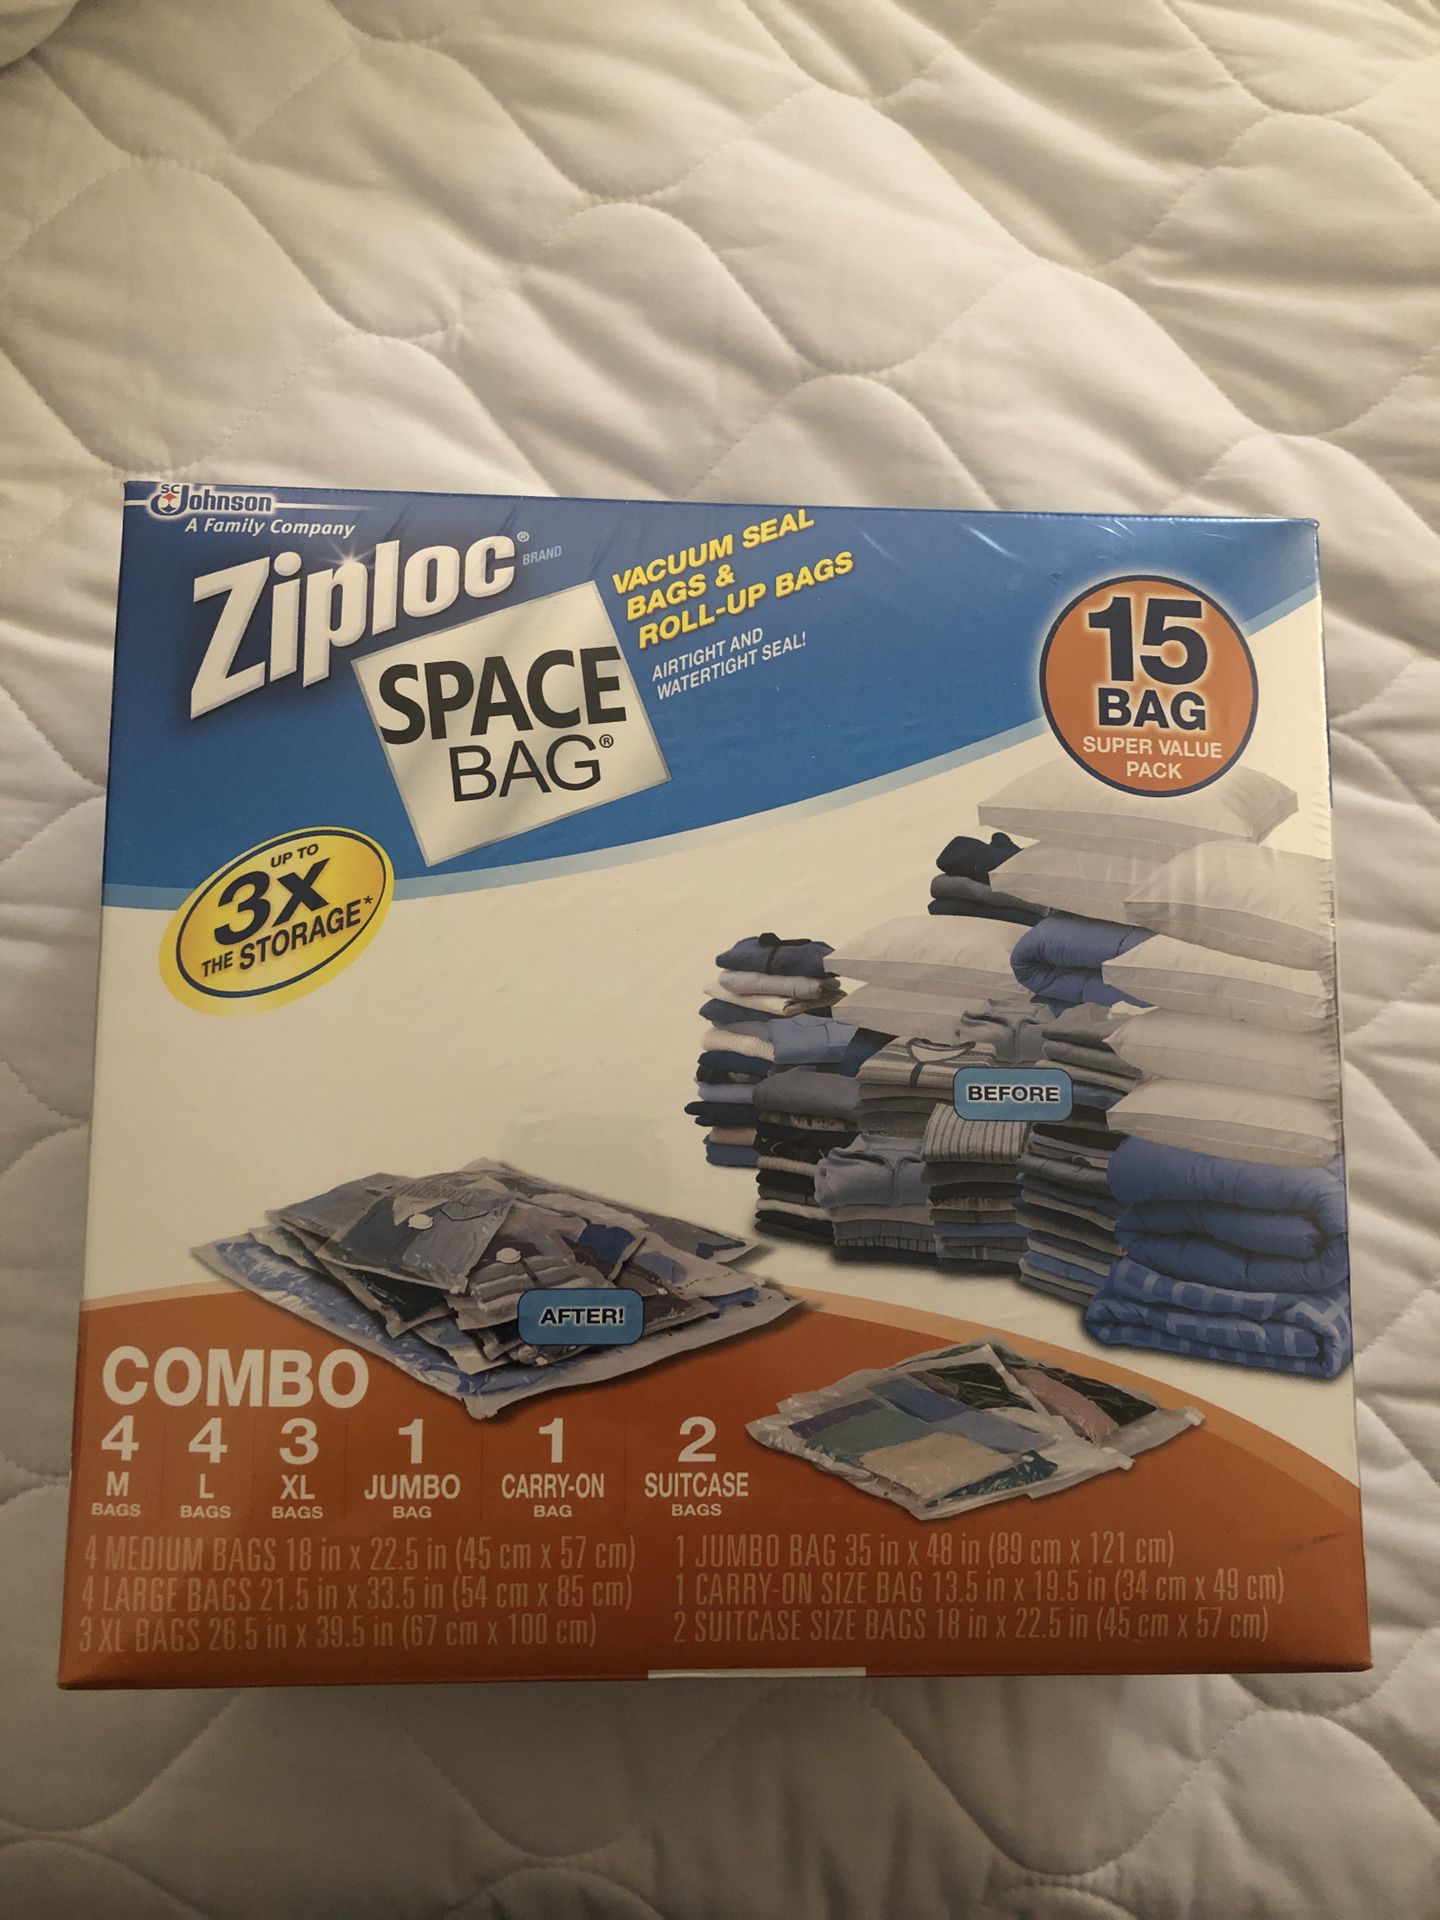 Ziplock Space bags - 15 Bags Set. Super Value Pack Brand New In Plastic